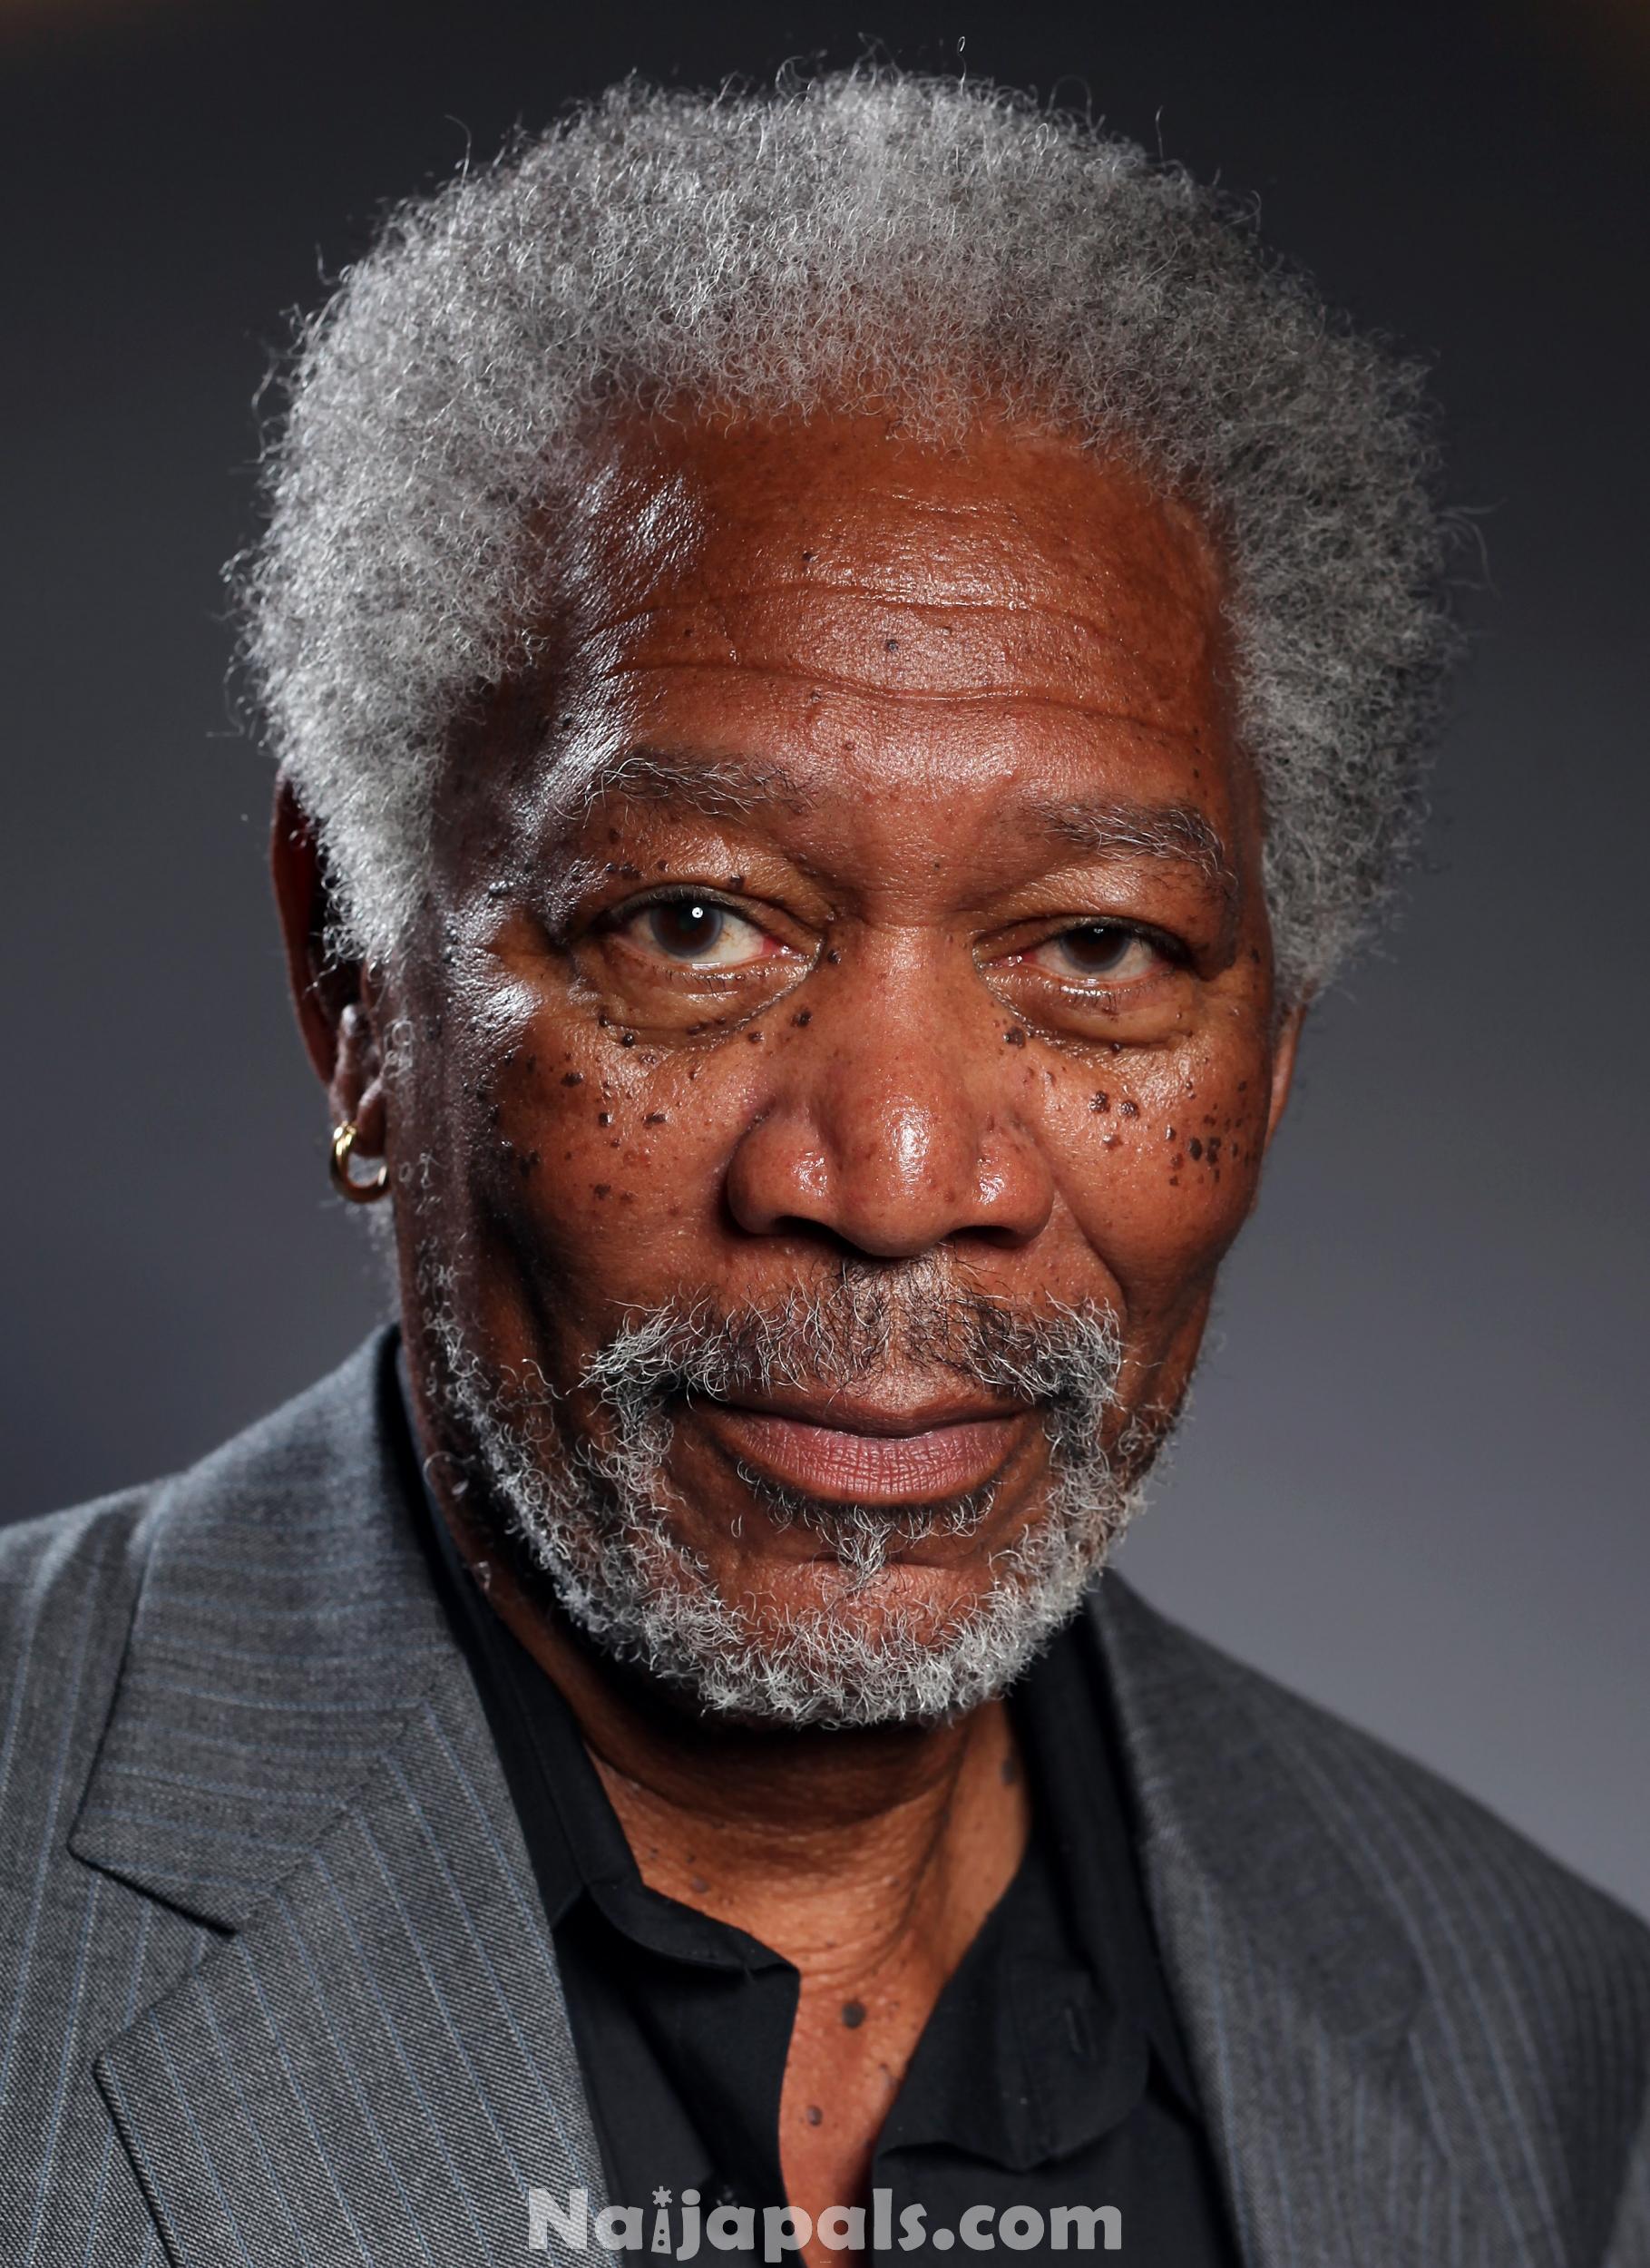 1.Morgan Freeman